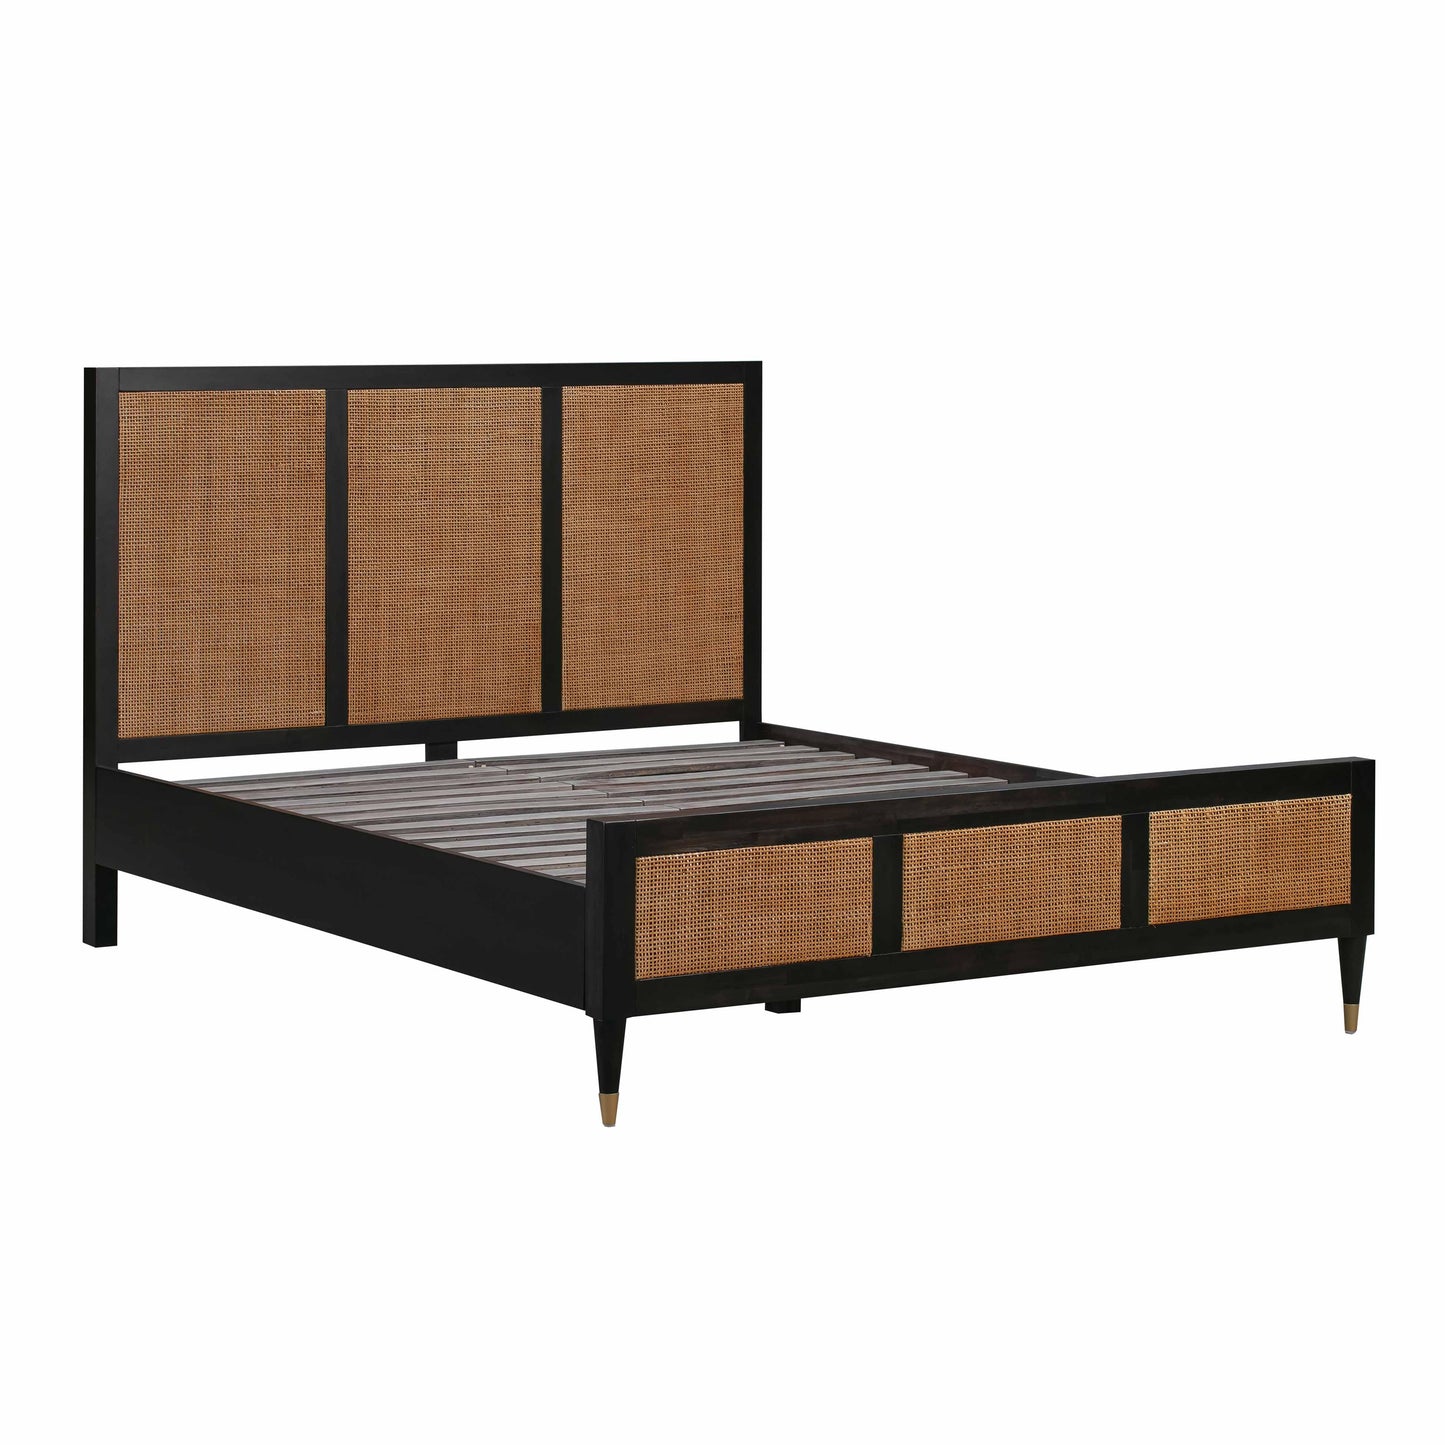 Tov Furniture Sierra Noir Queen Bed